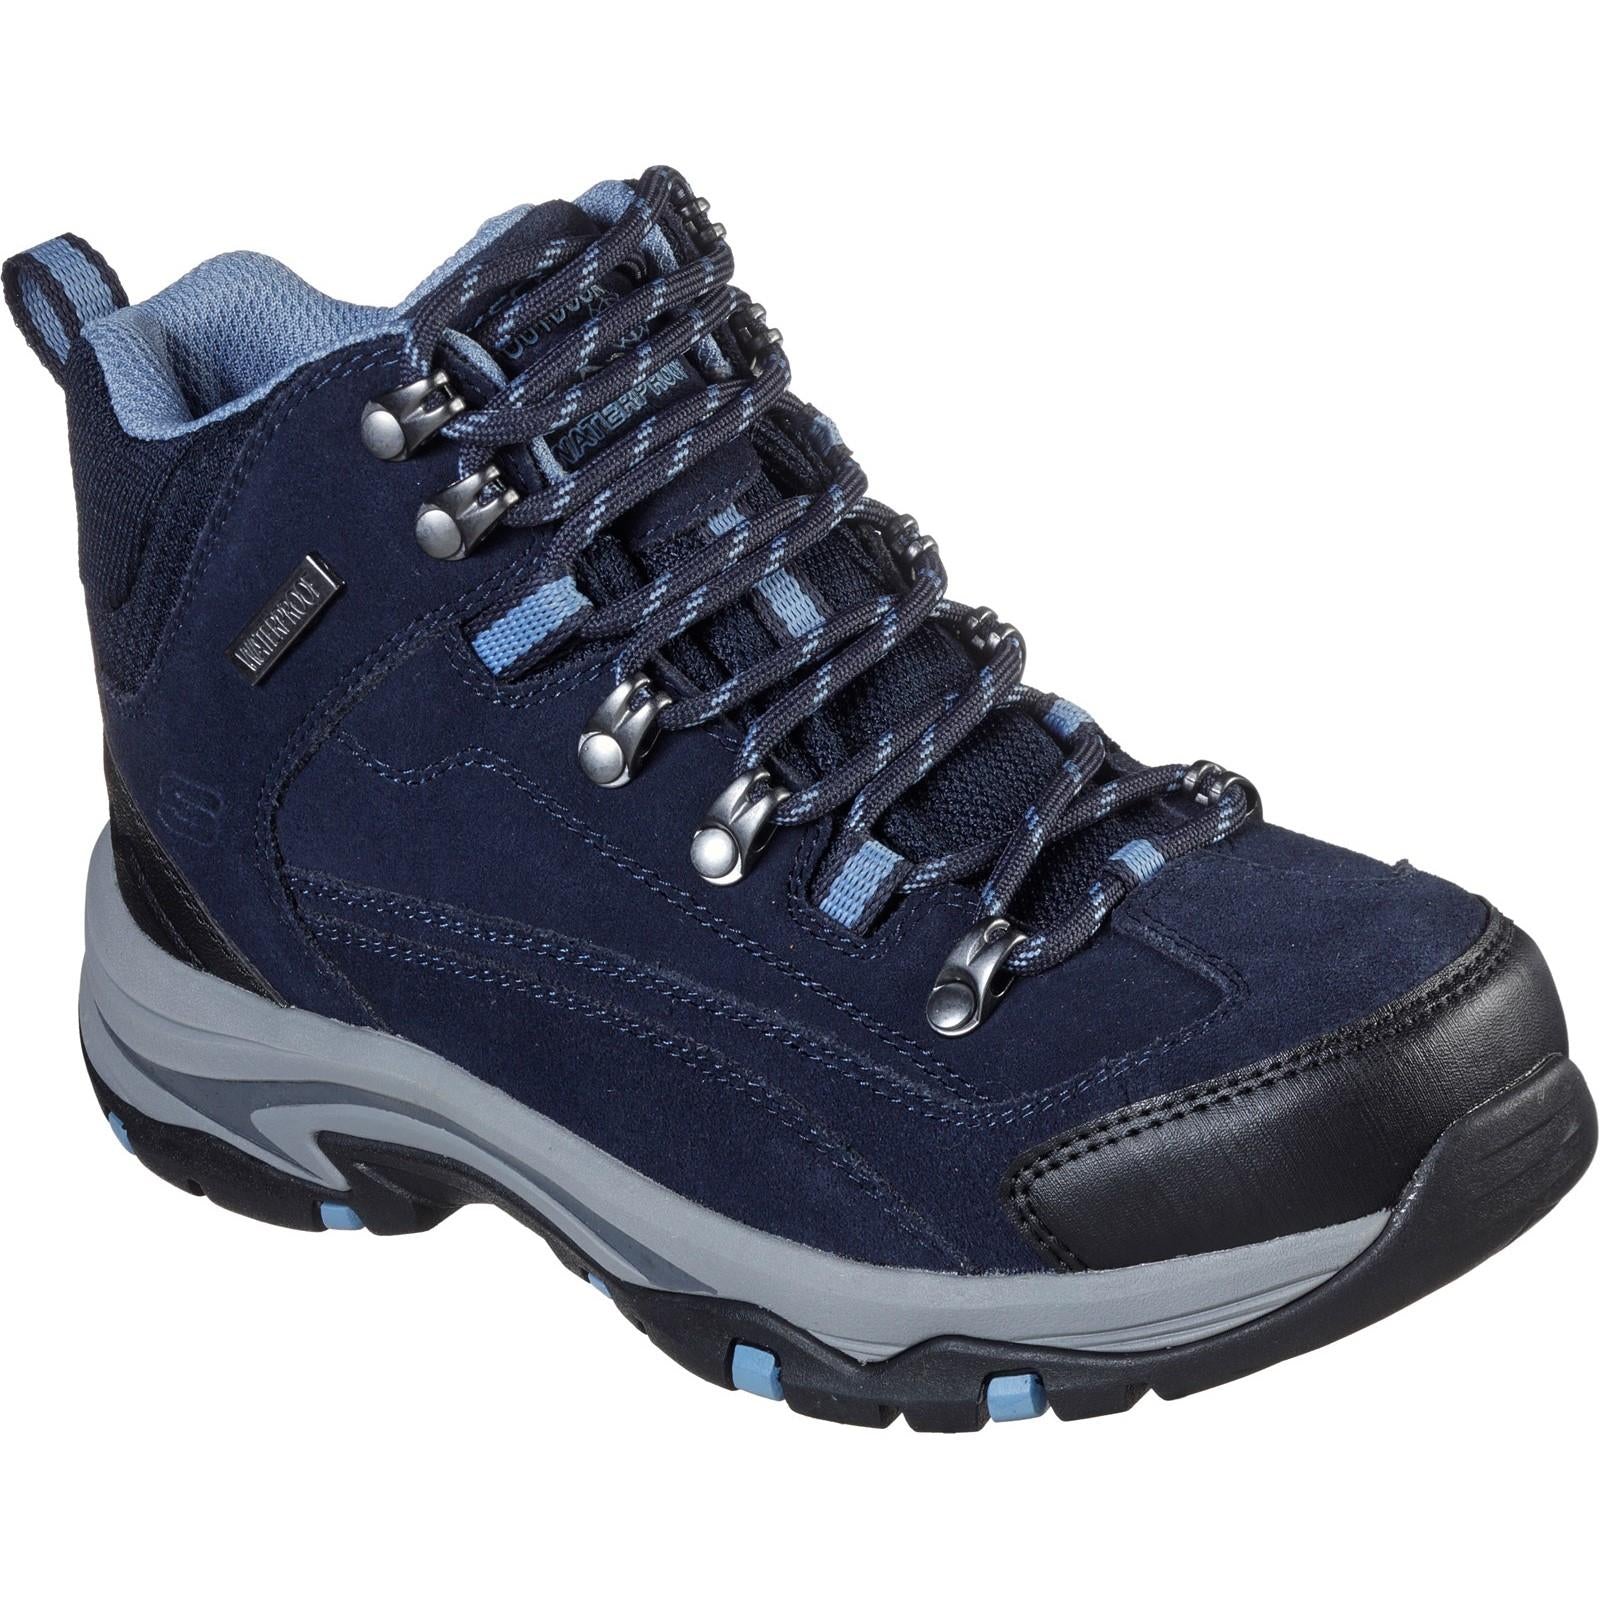 Skechers Trego Alpine Trail navy waterproof hiking woman's boots #167004